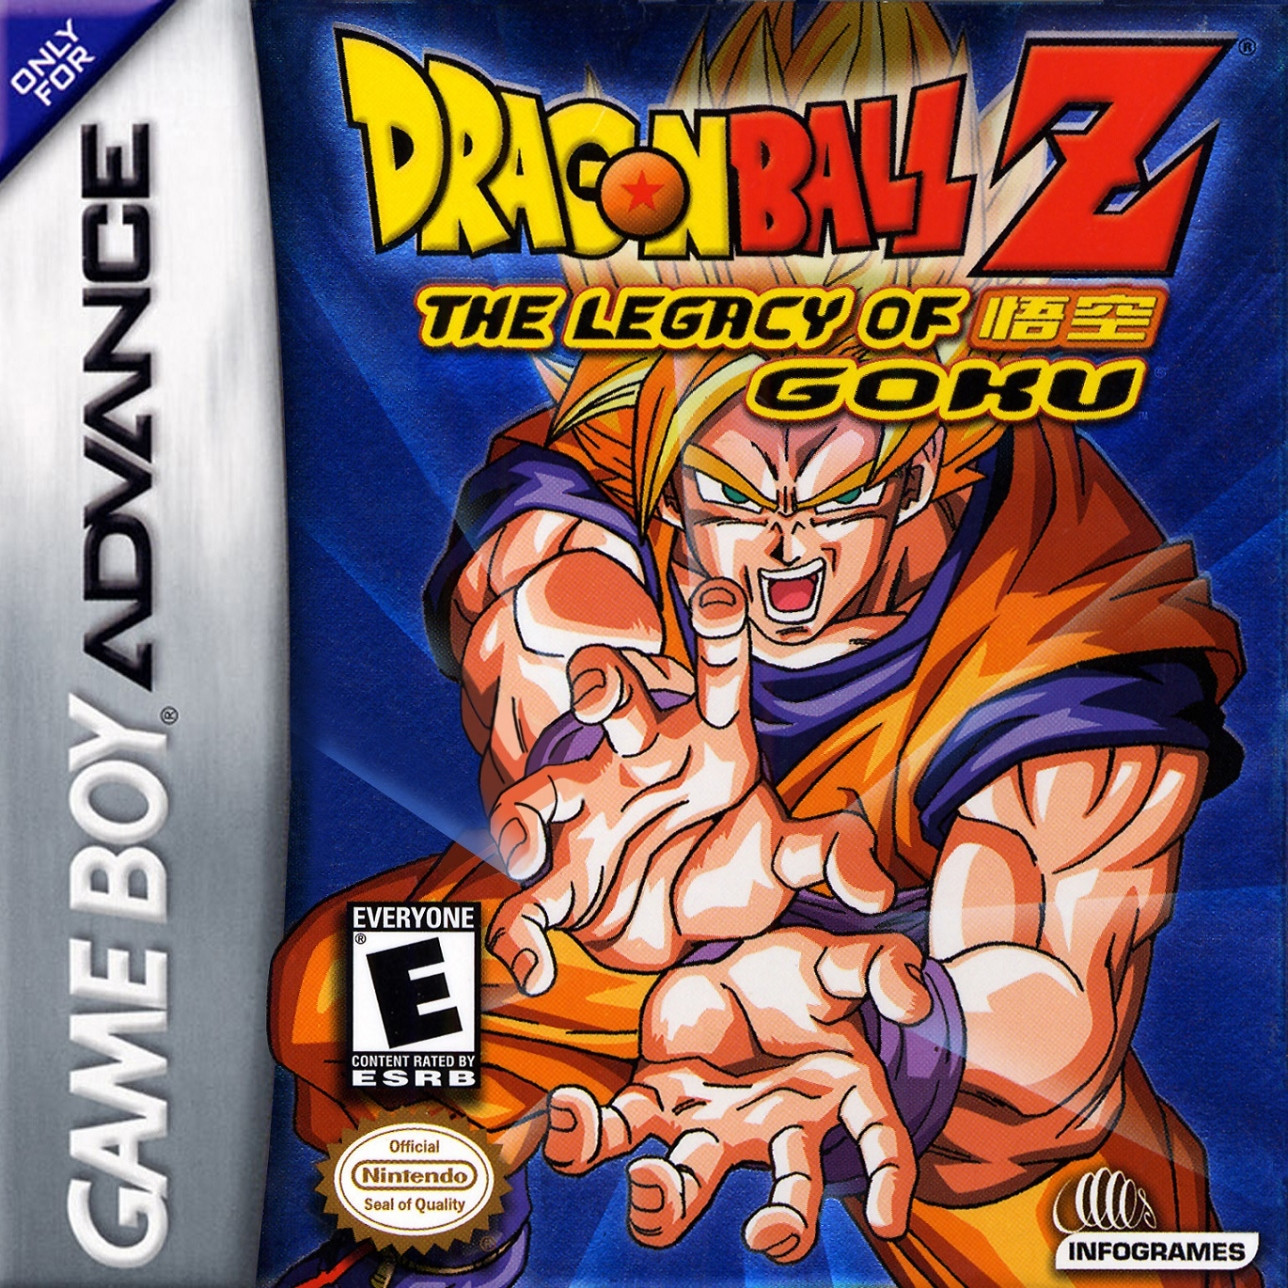 Draaien Hesje Premedicatie Nedgame gameshop: Dragon Ball Z Legacy Of Goku (GameBoy Advance) kopen